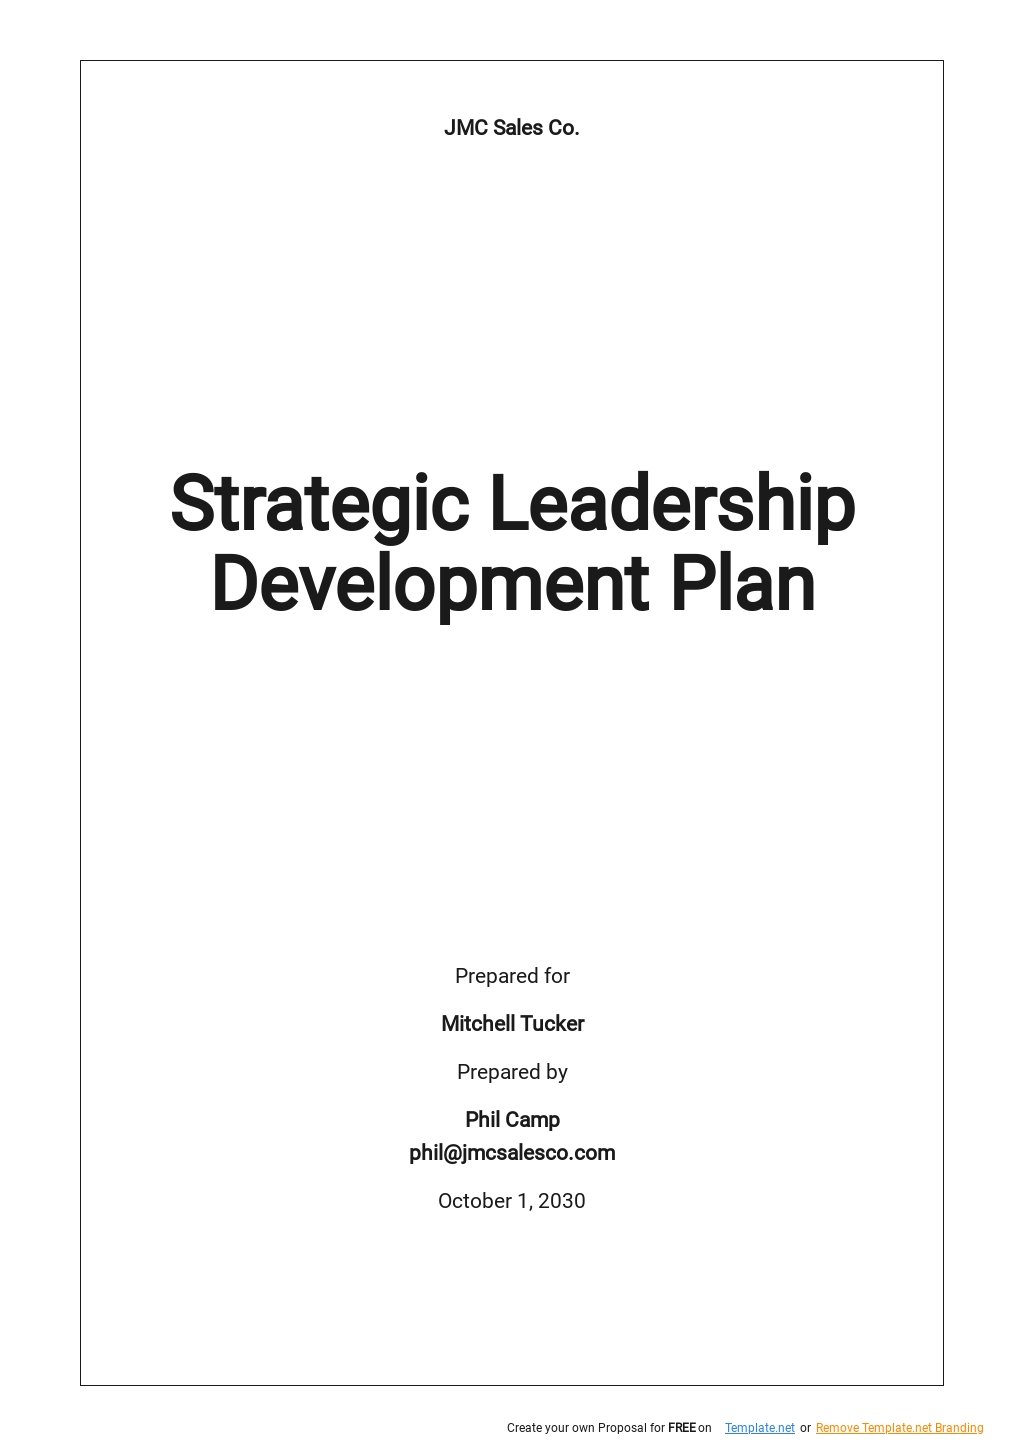 Strategic Leadership Development Plan Template